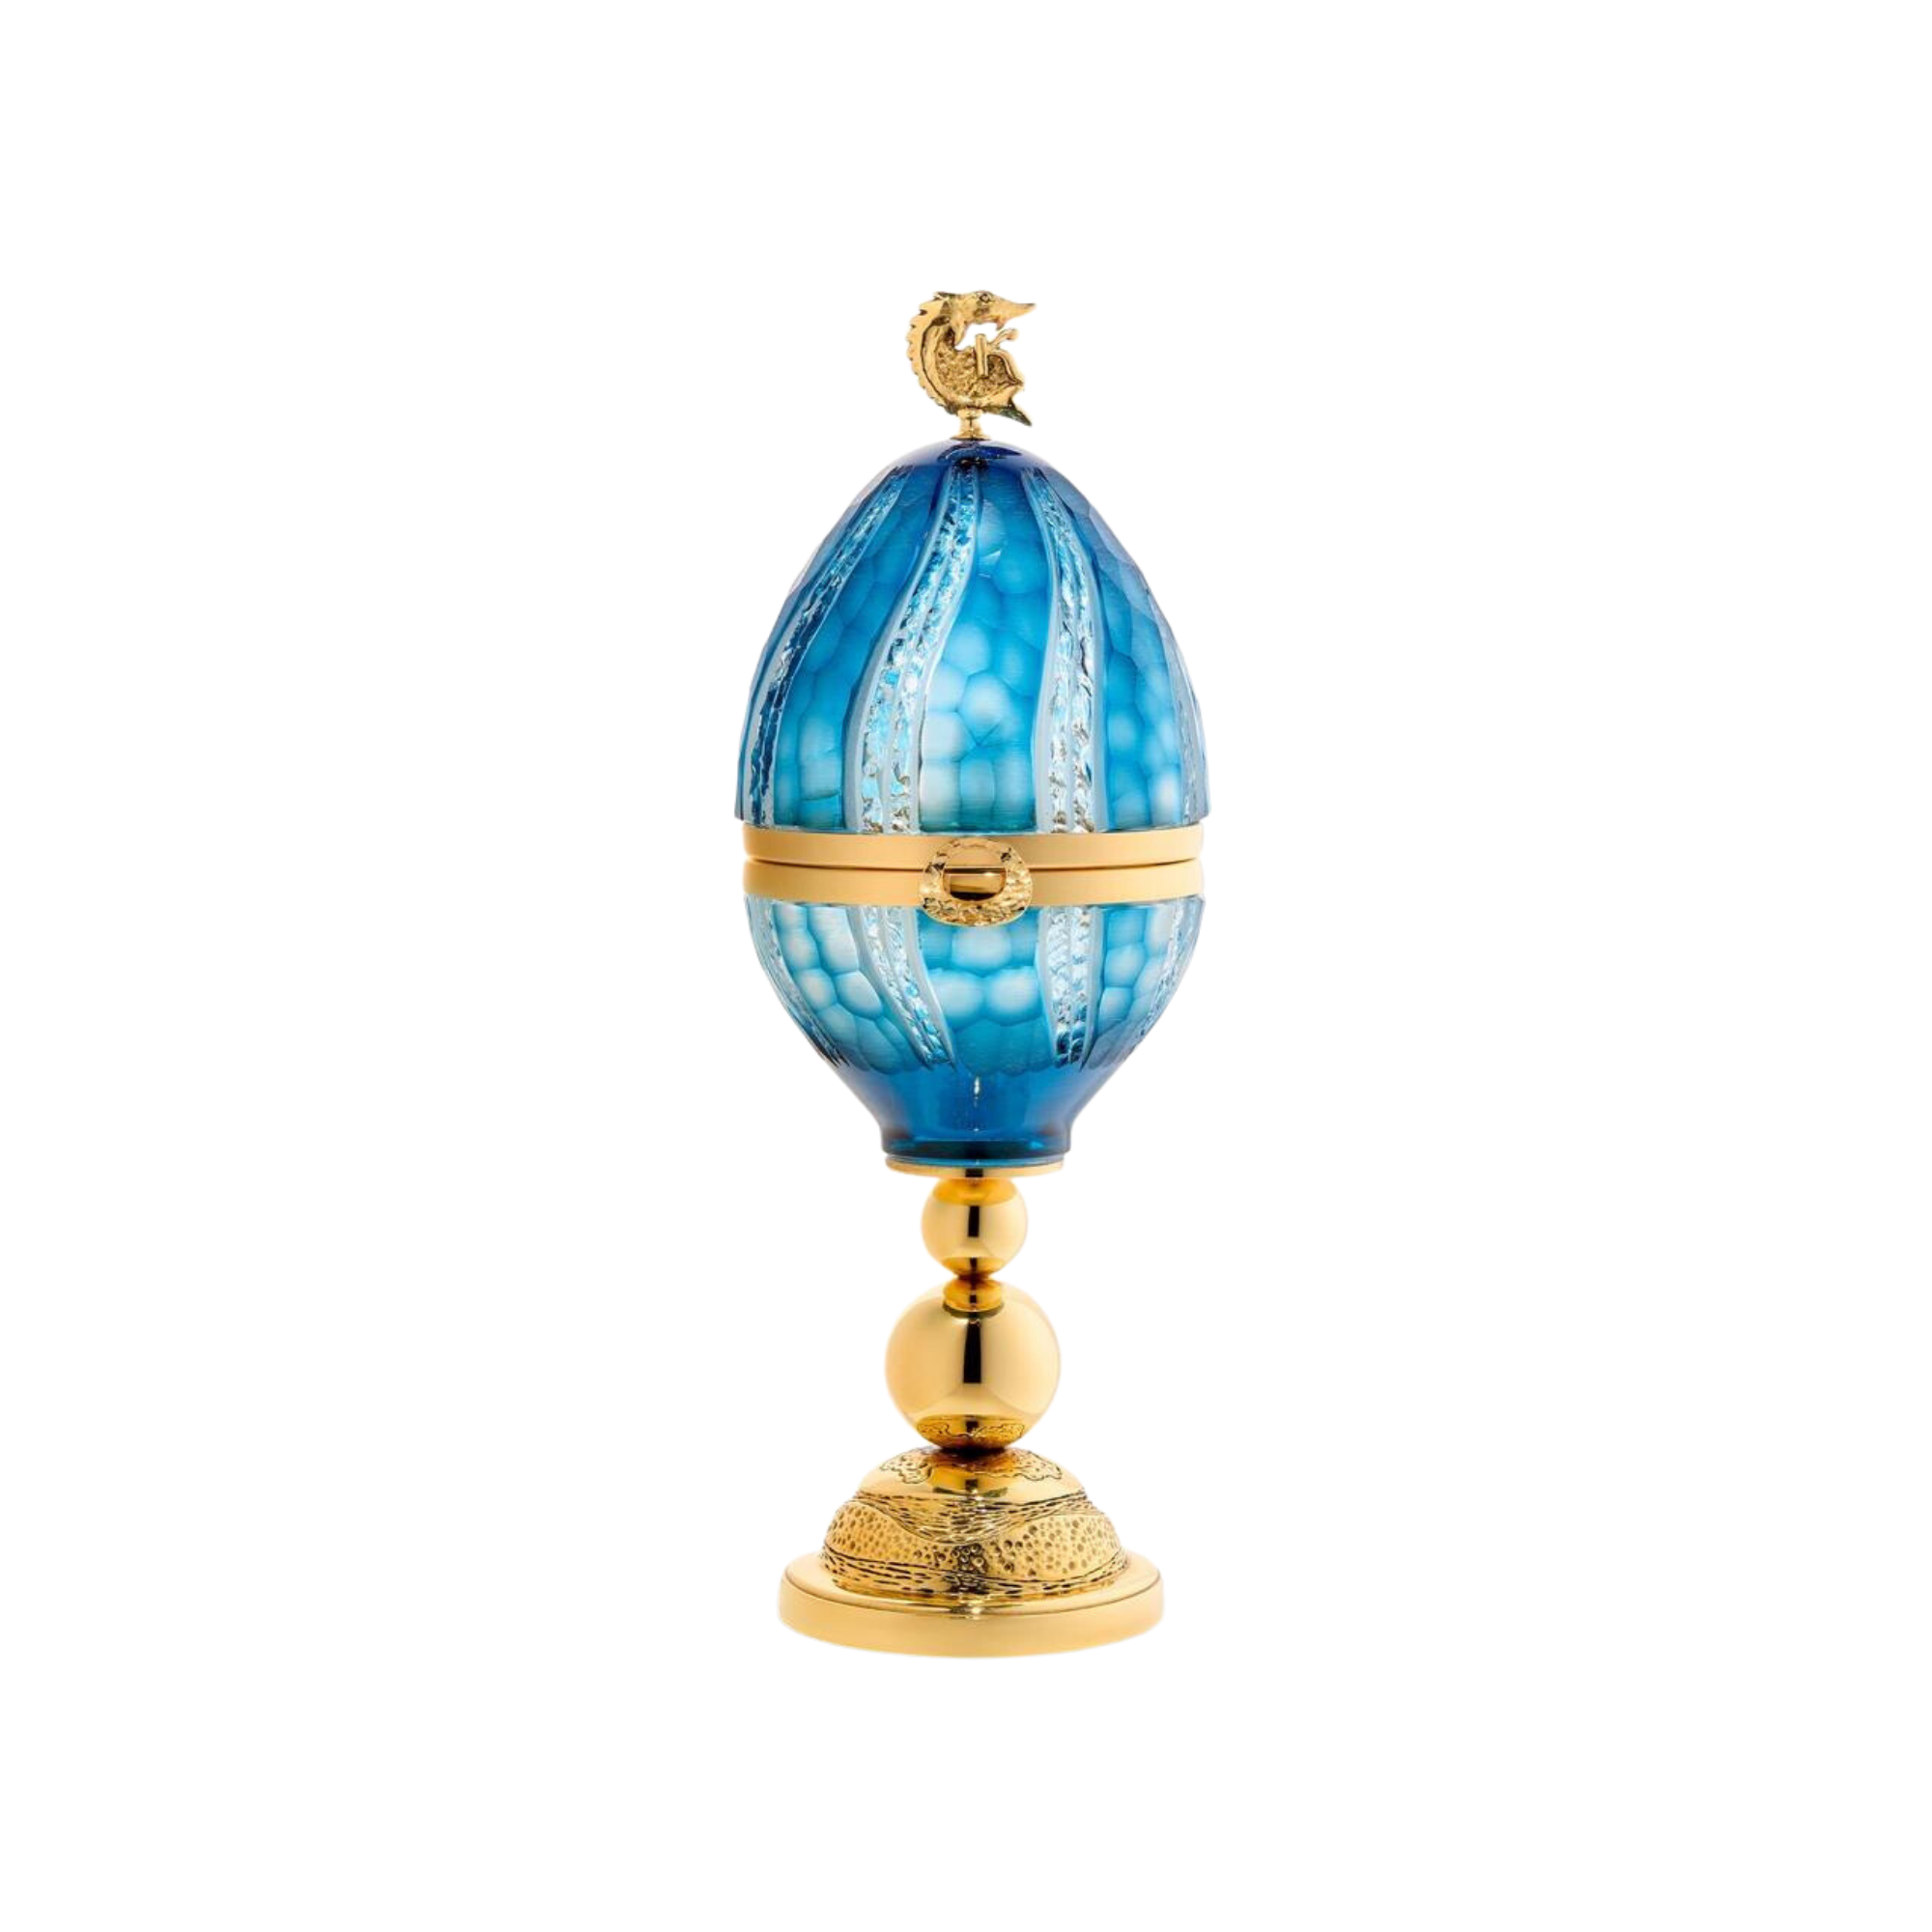 The Kaspia Easter Egg